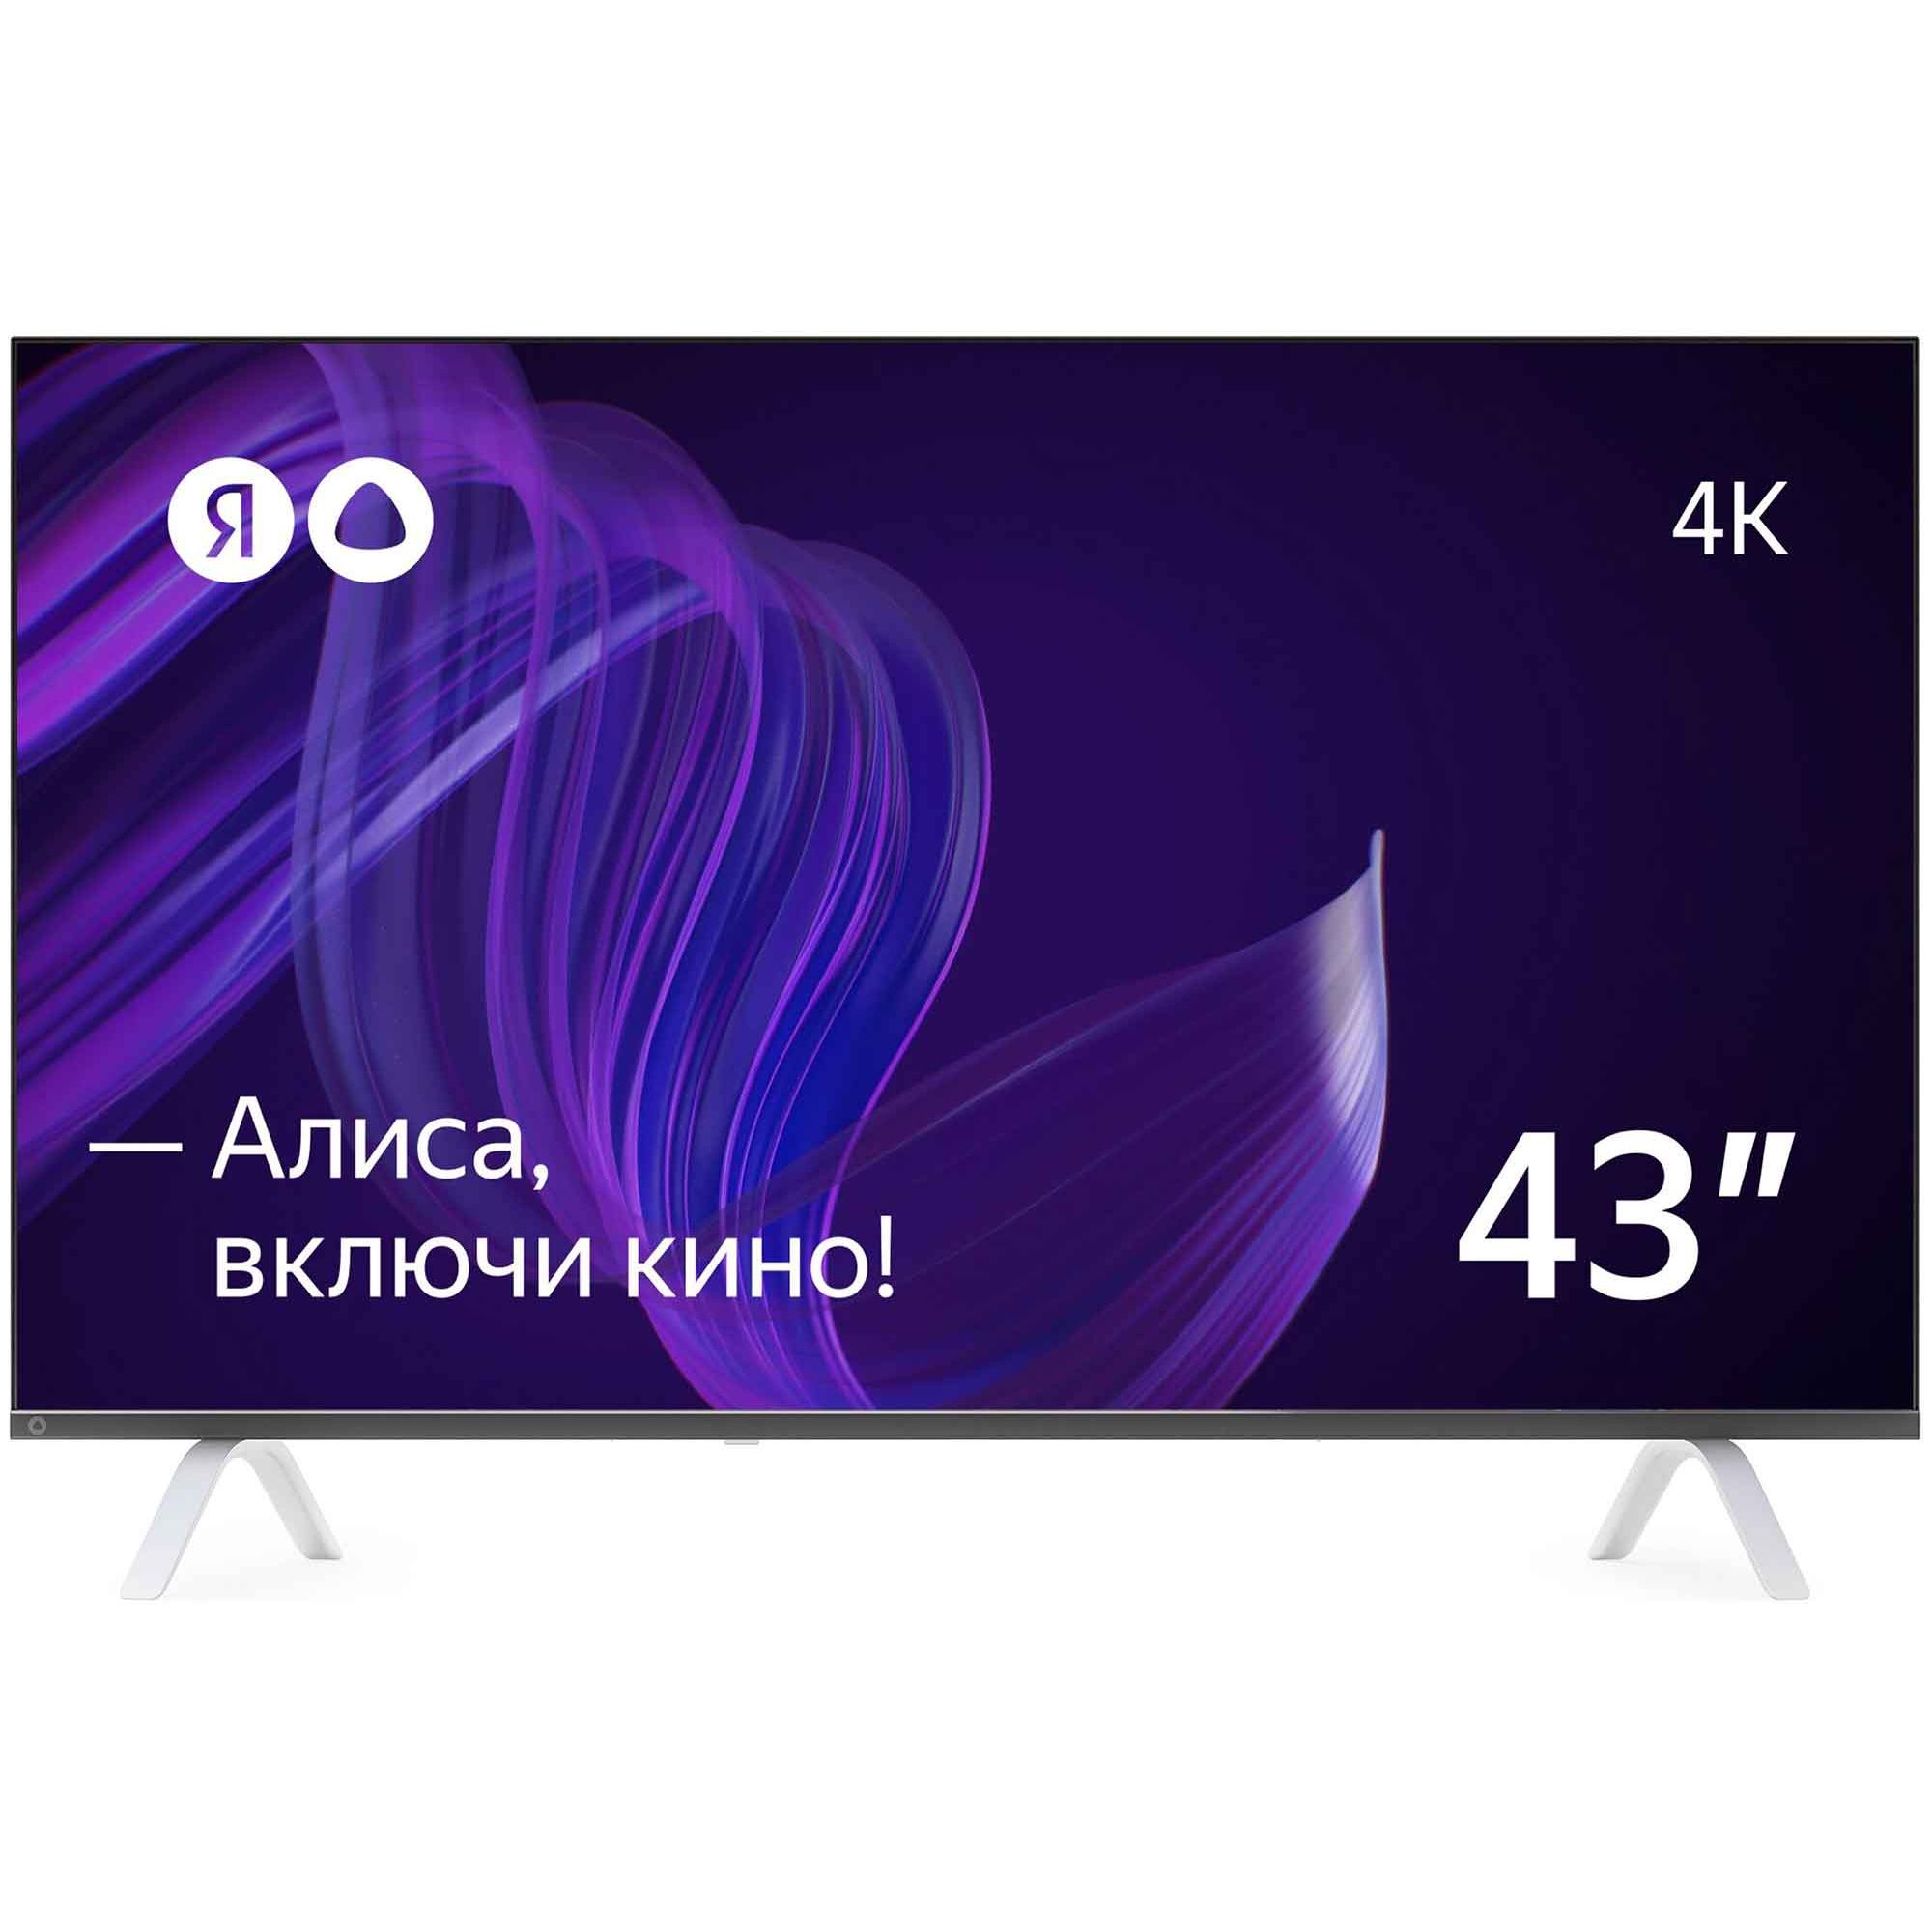 Телевизор Яндекс 43 YNDX-00071 YANDEX телевизор яндекс 55 yndx 00073 черный